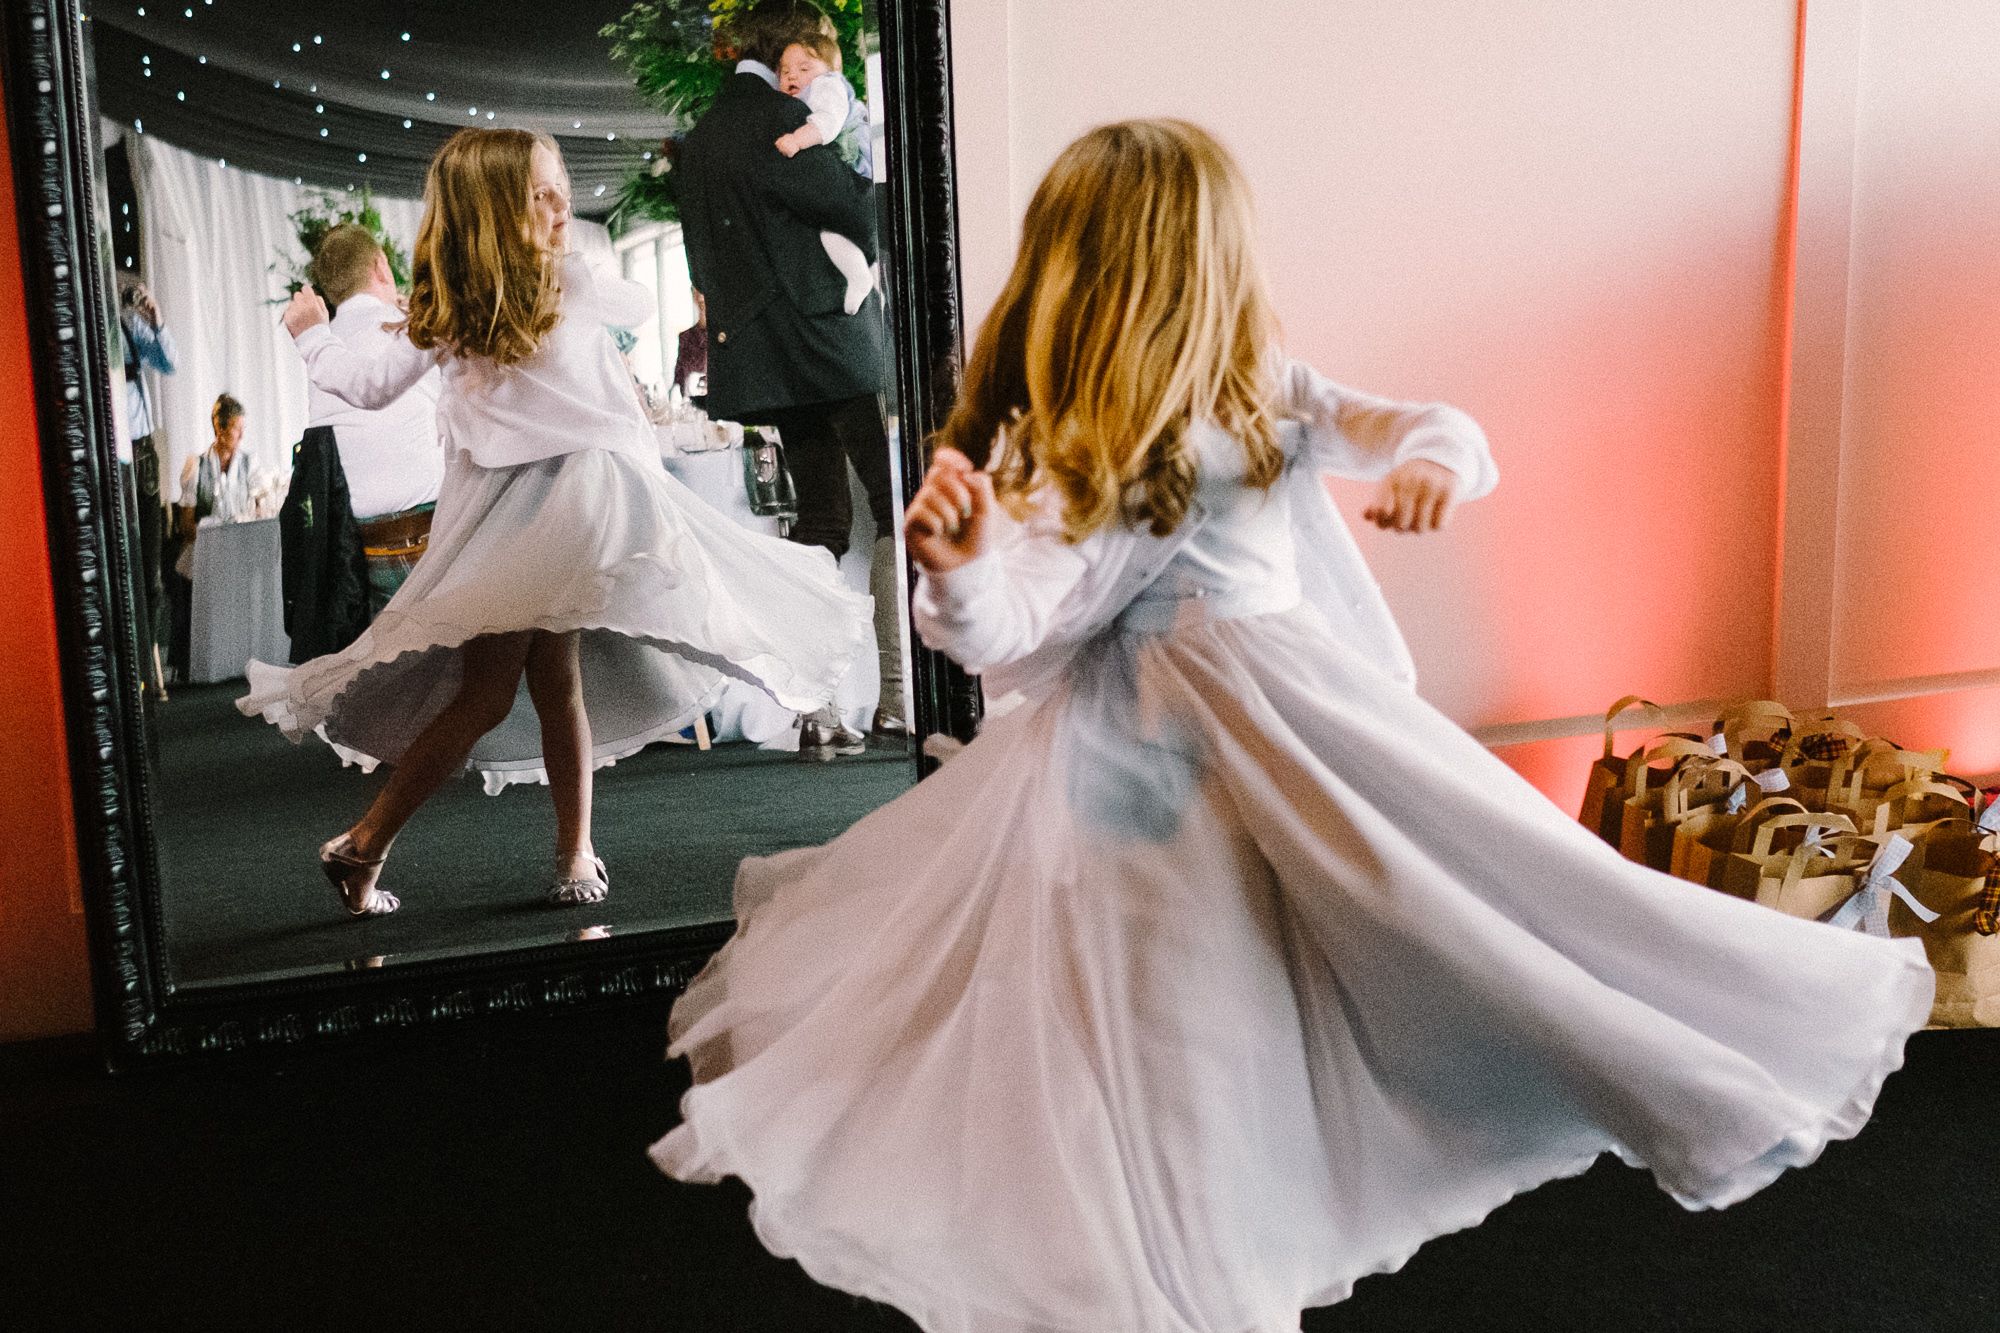 Little girl dancing in front of mirror